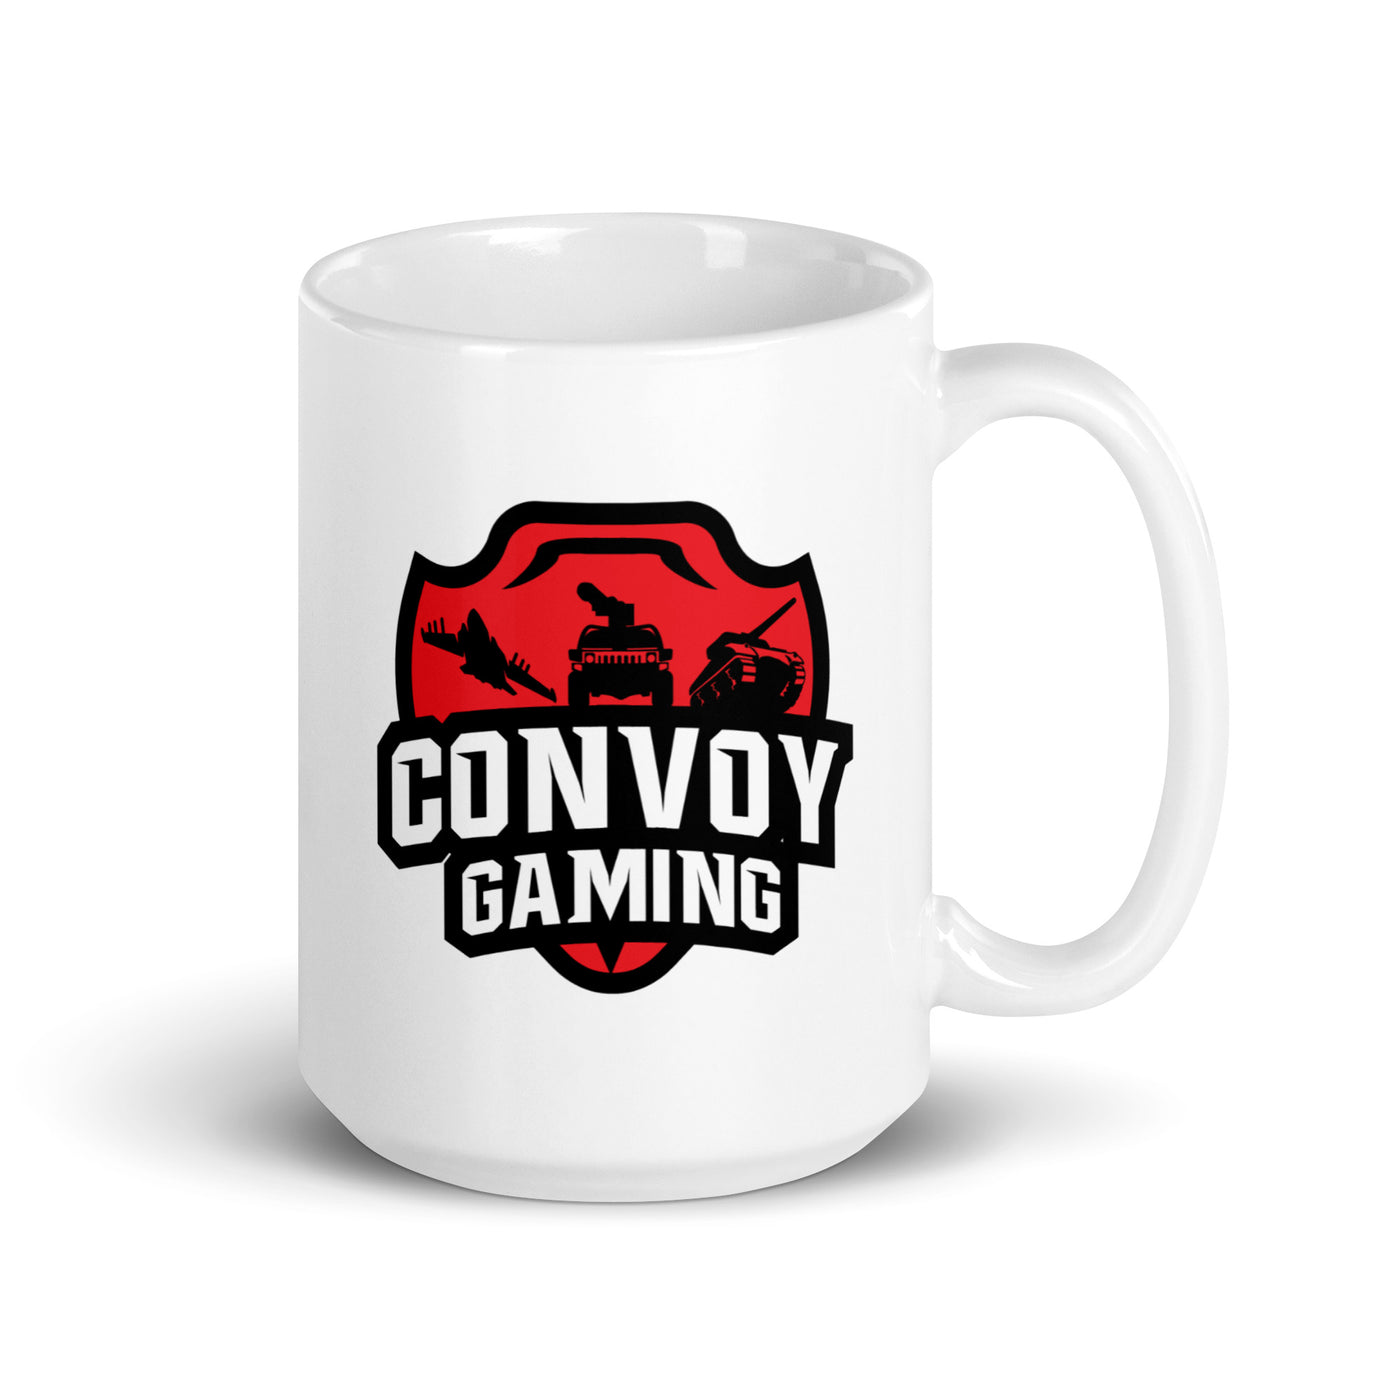 Convoy Gaming White glossy mug